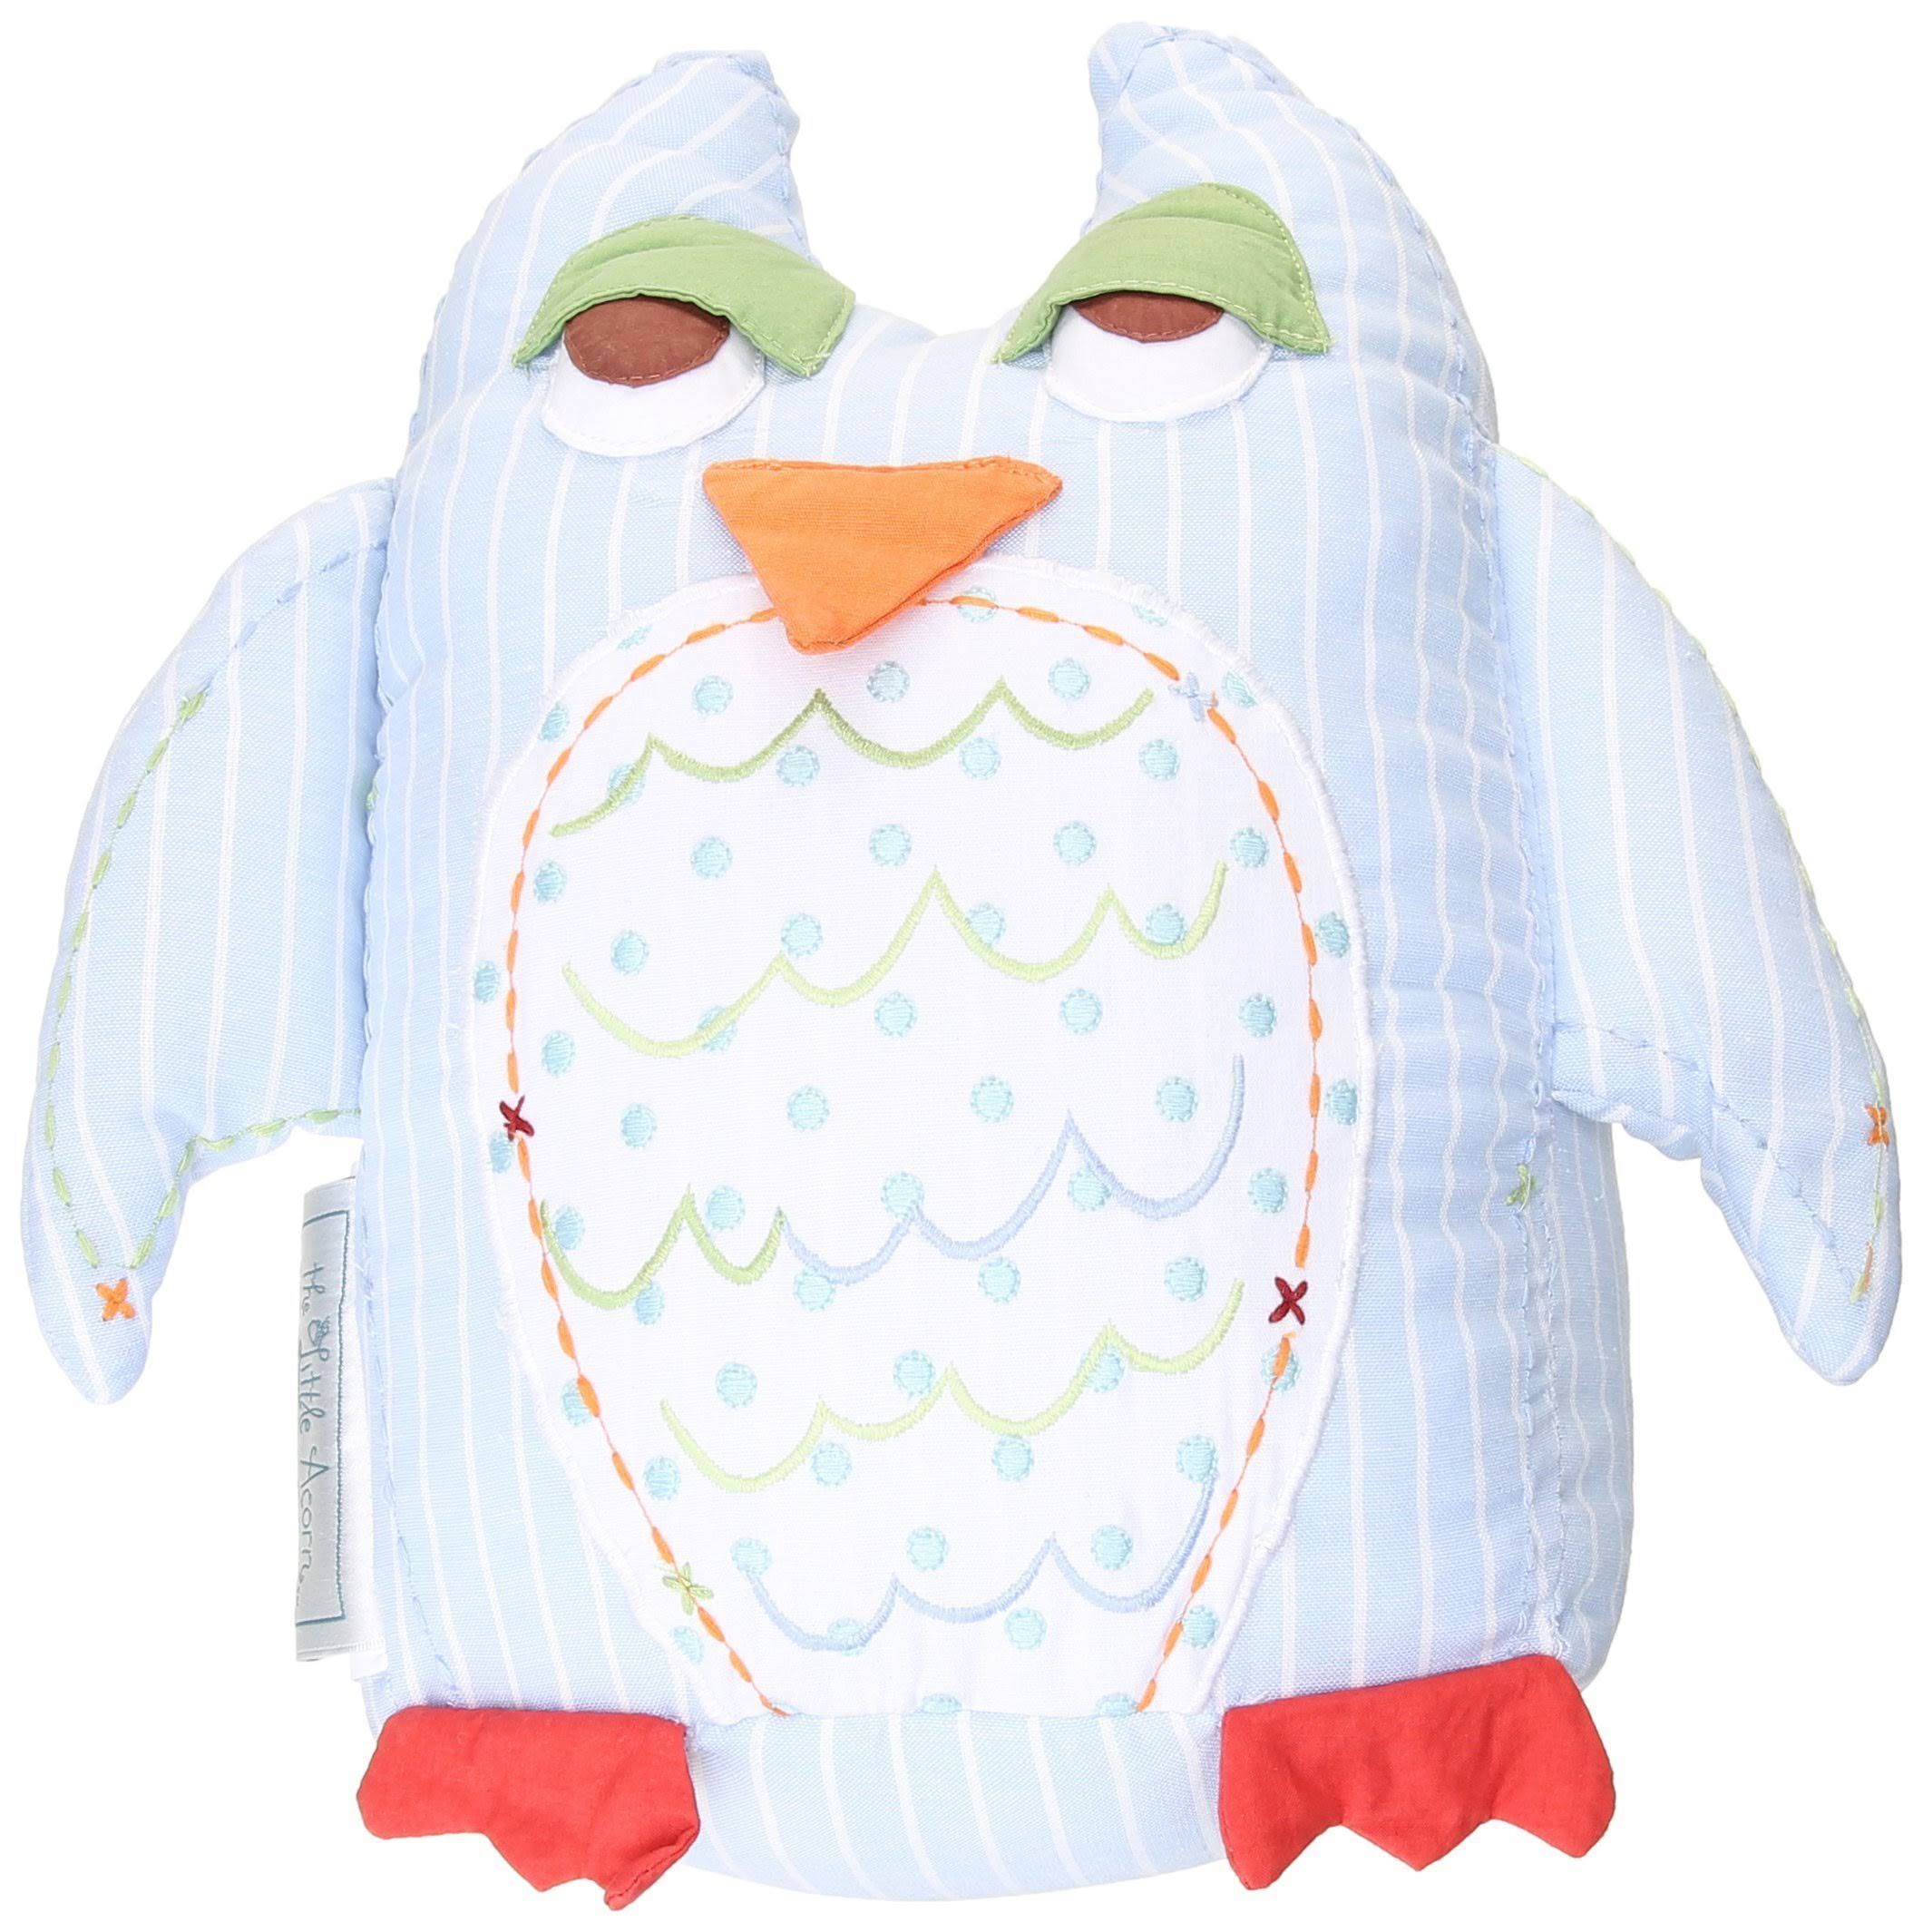 Little Acorn S11P13 Owl shaped pillow